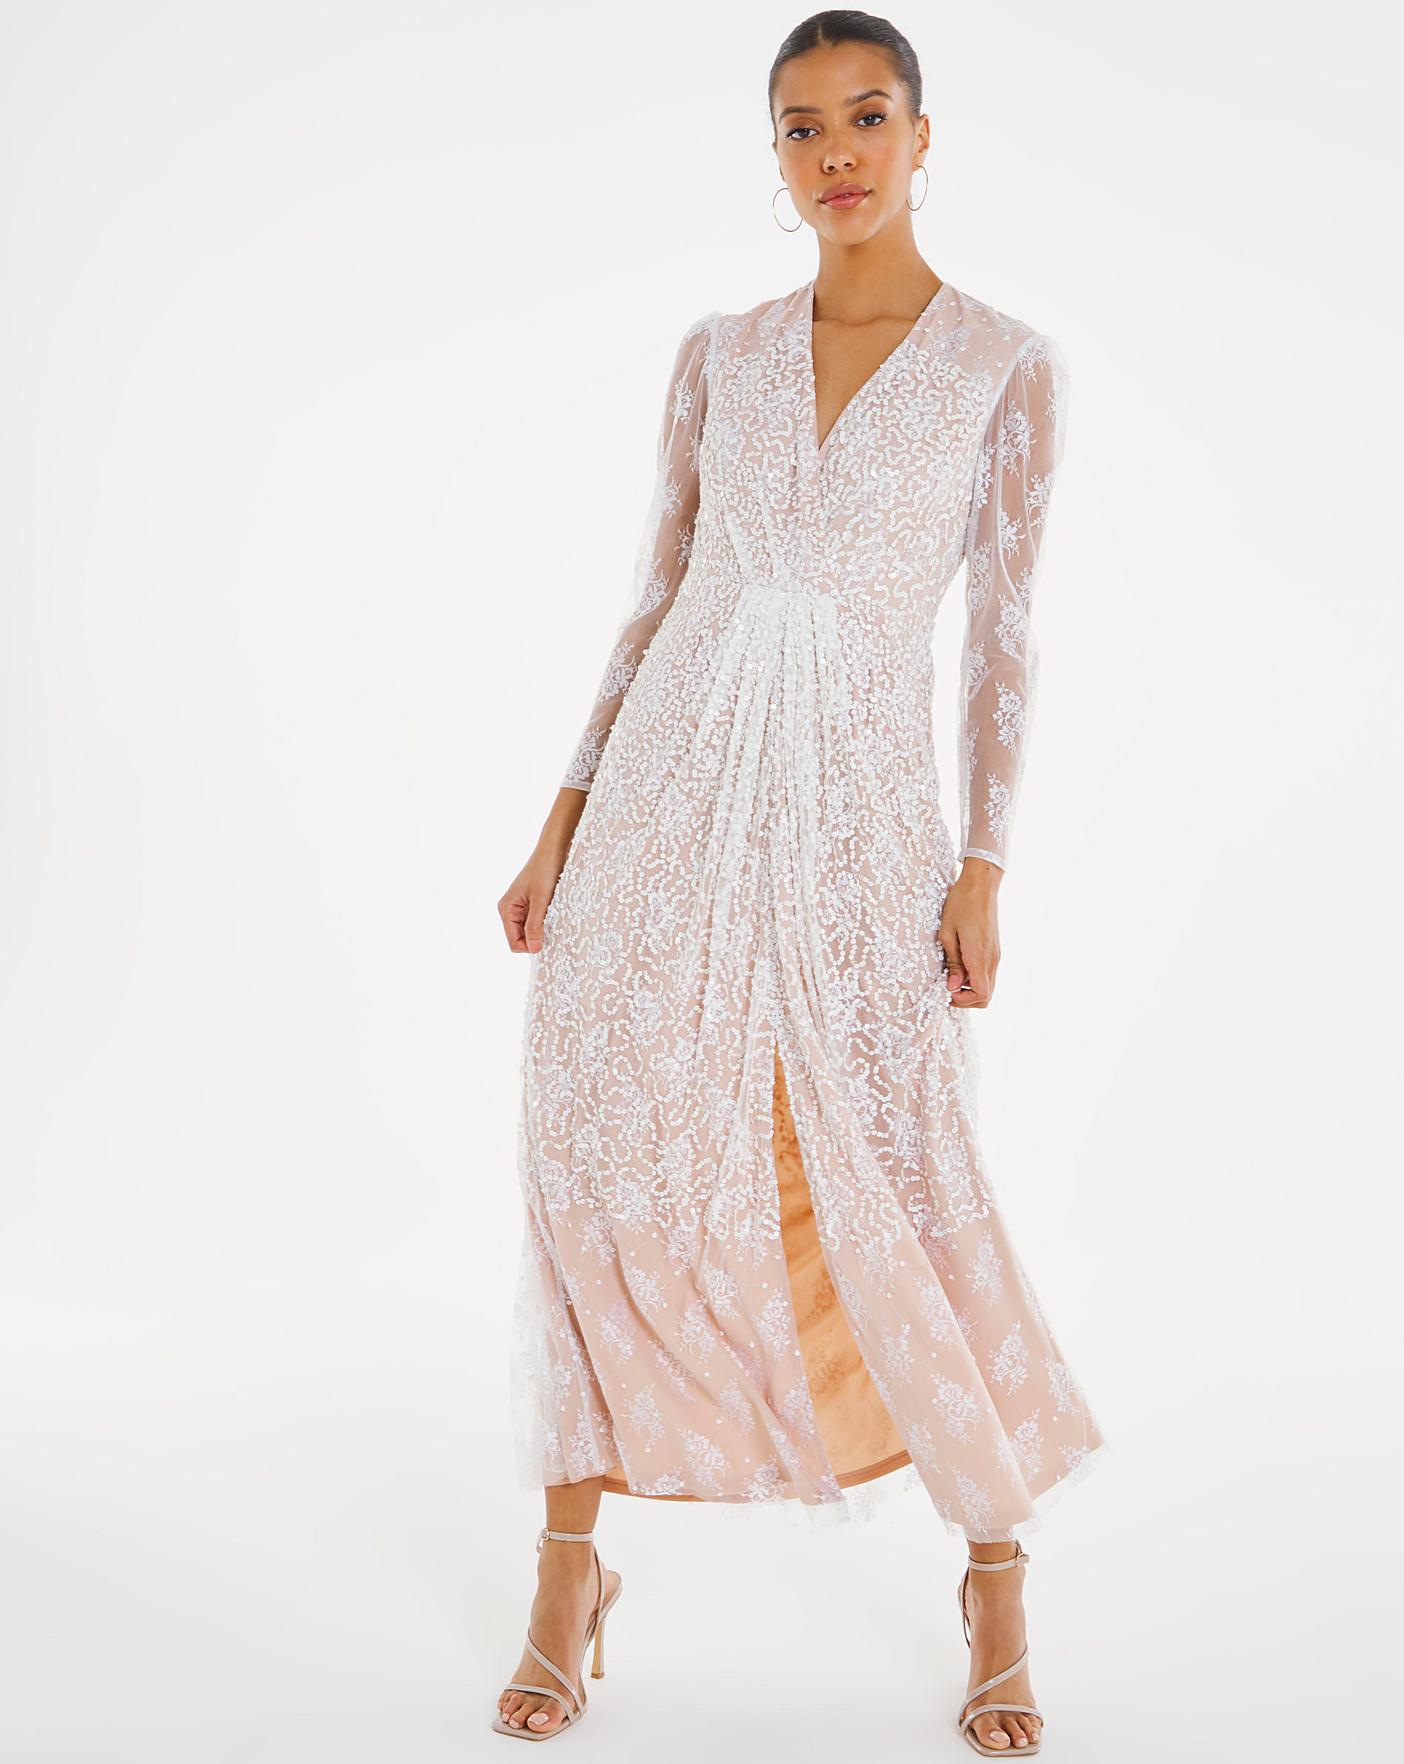 Buy > joanna hope sequin maxi dress > in stock